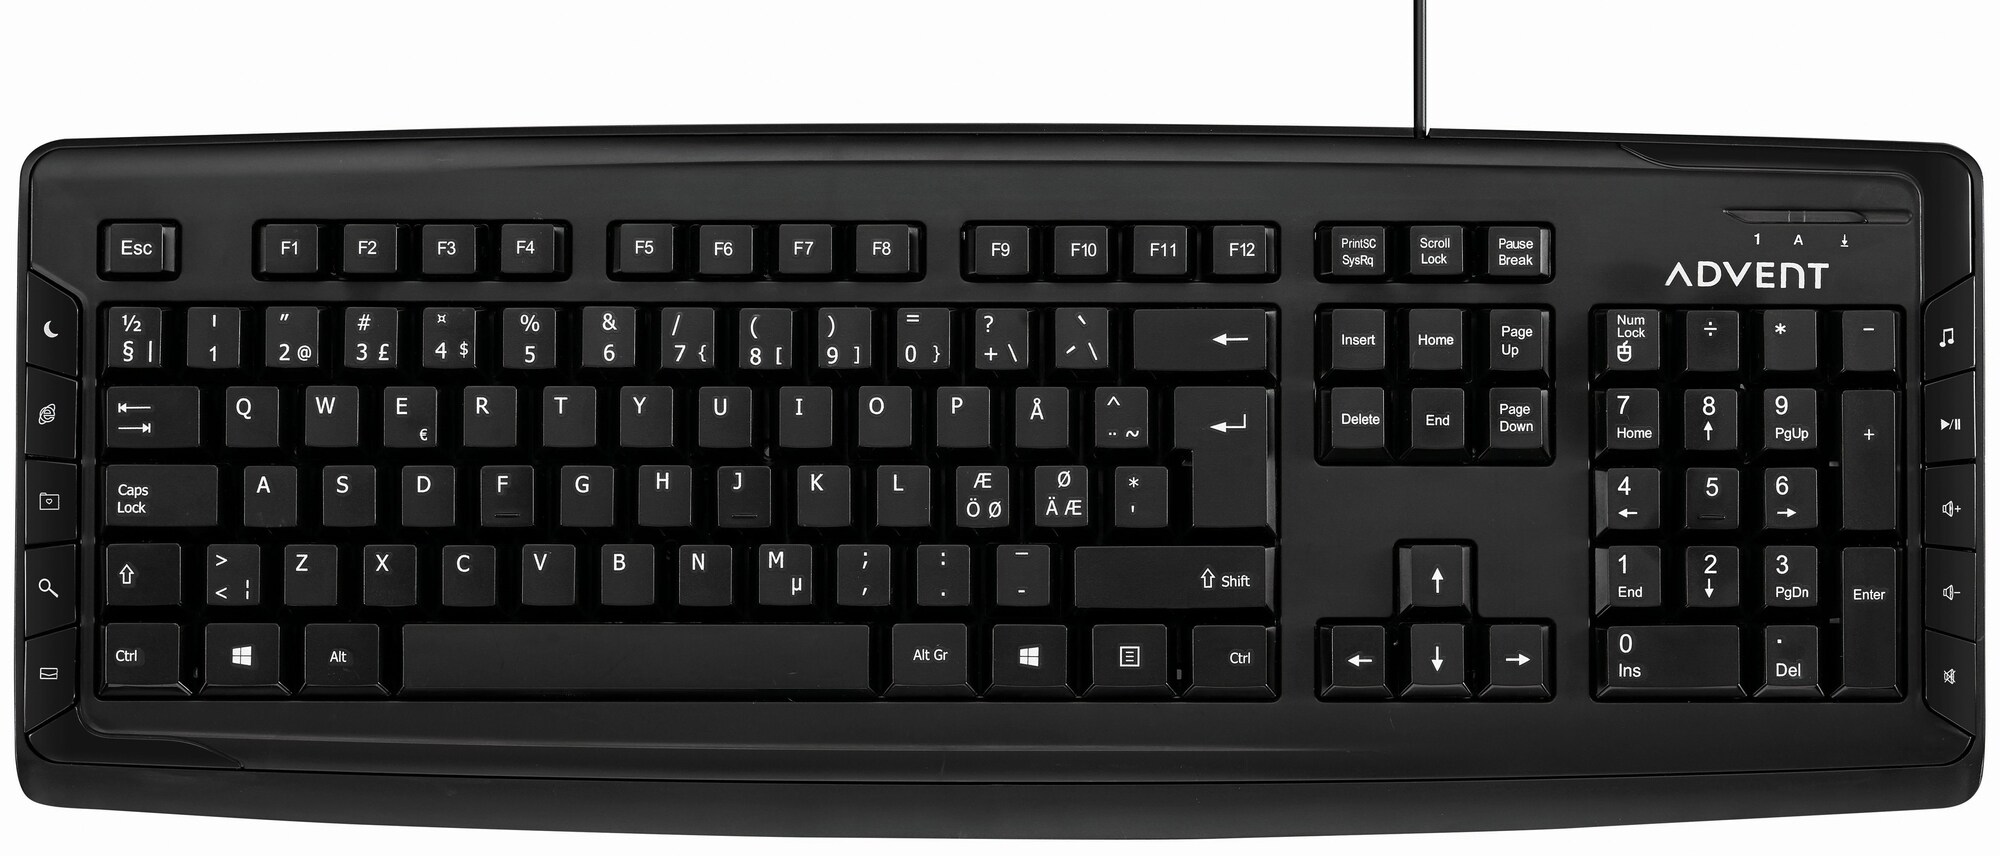 Advent kablet tastatur (sort) - Mus og tastatur - Elkjøp